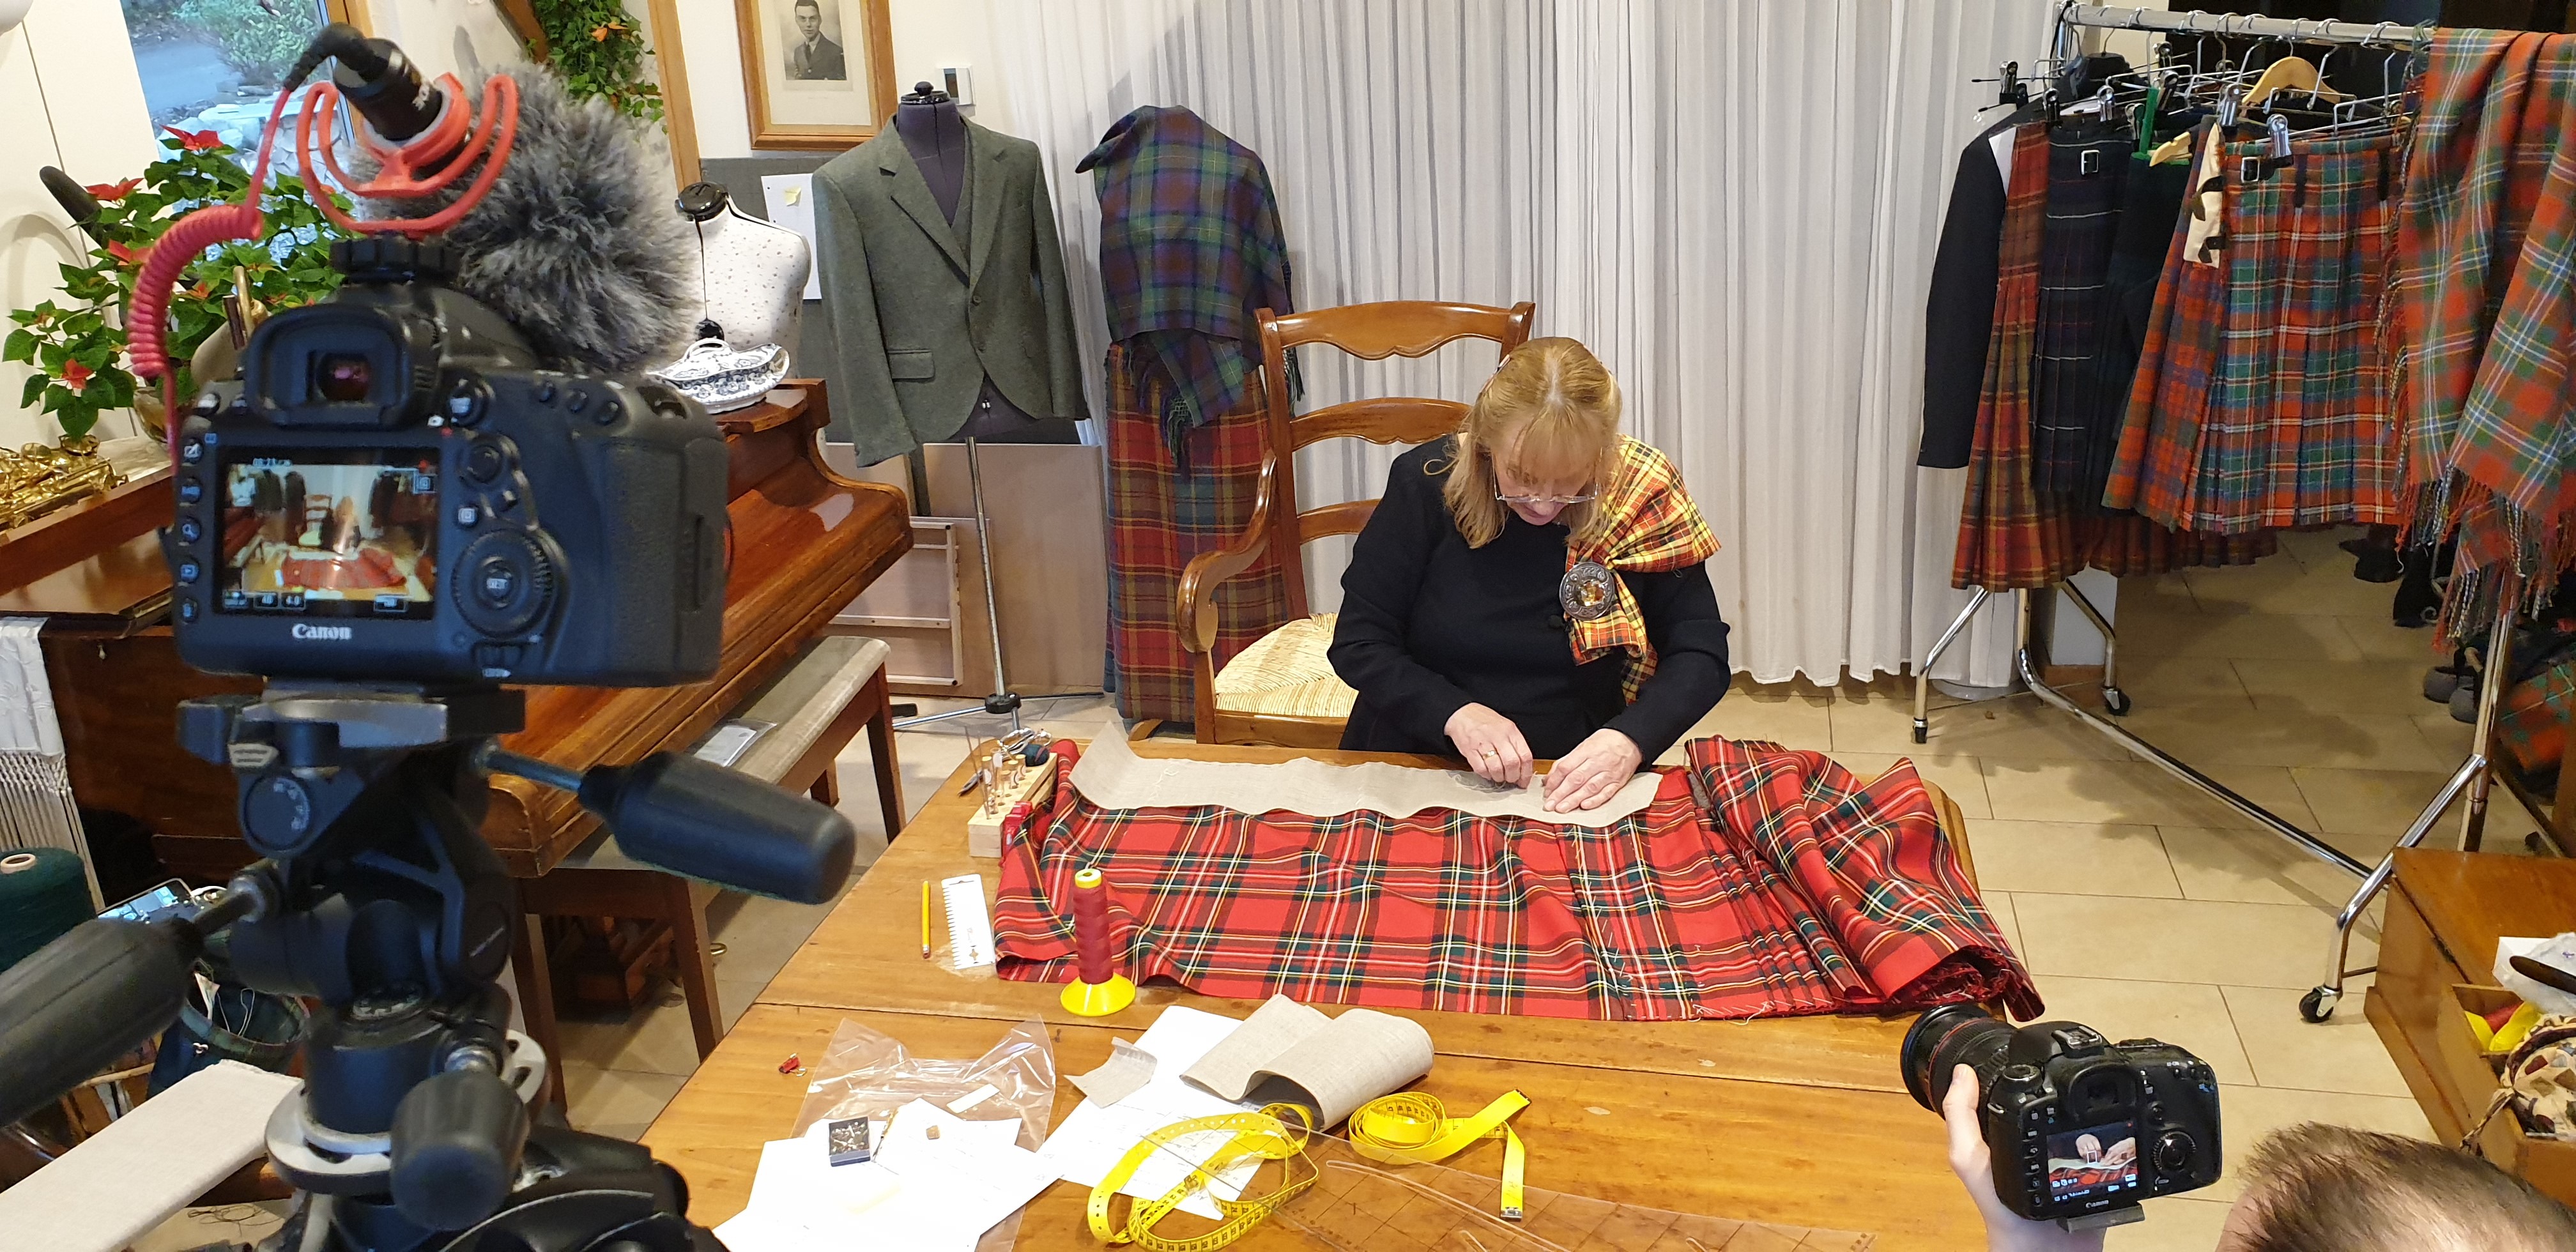 A women working in perthshire based tartan making business